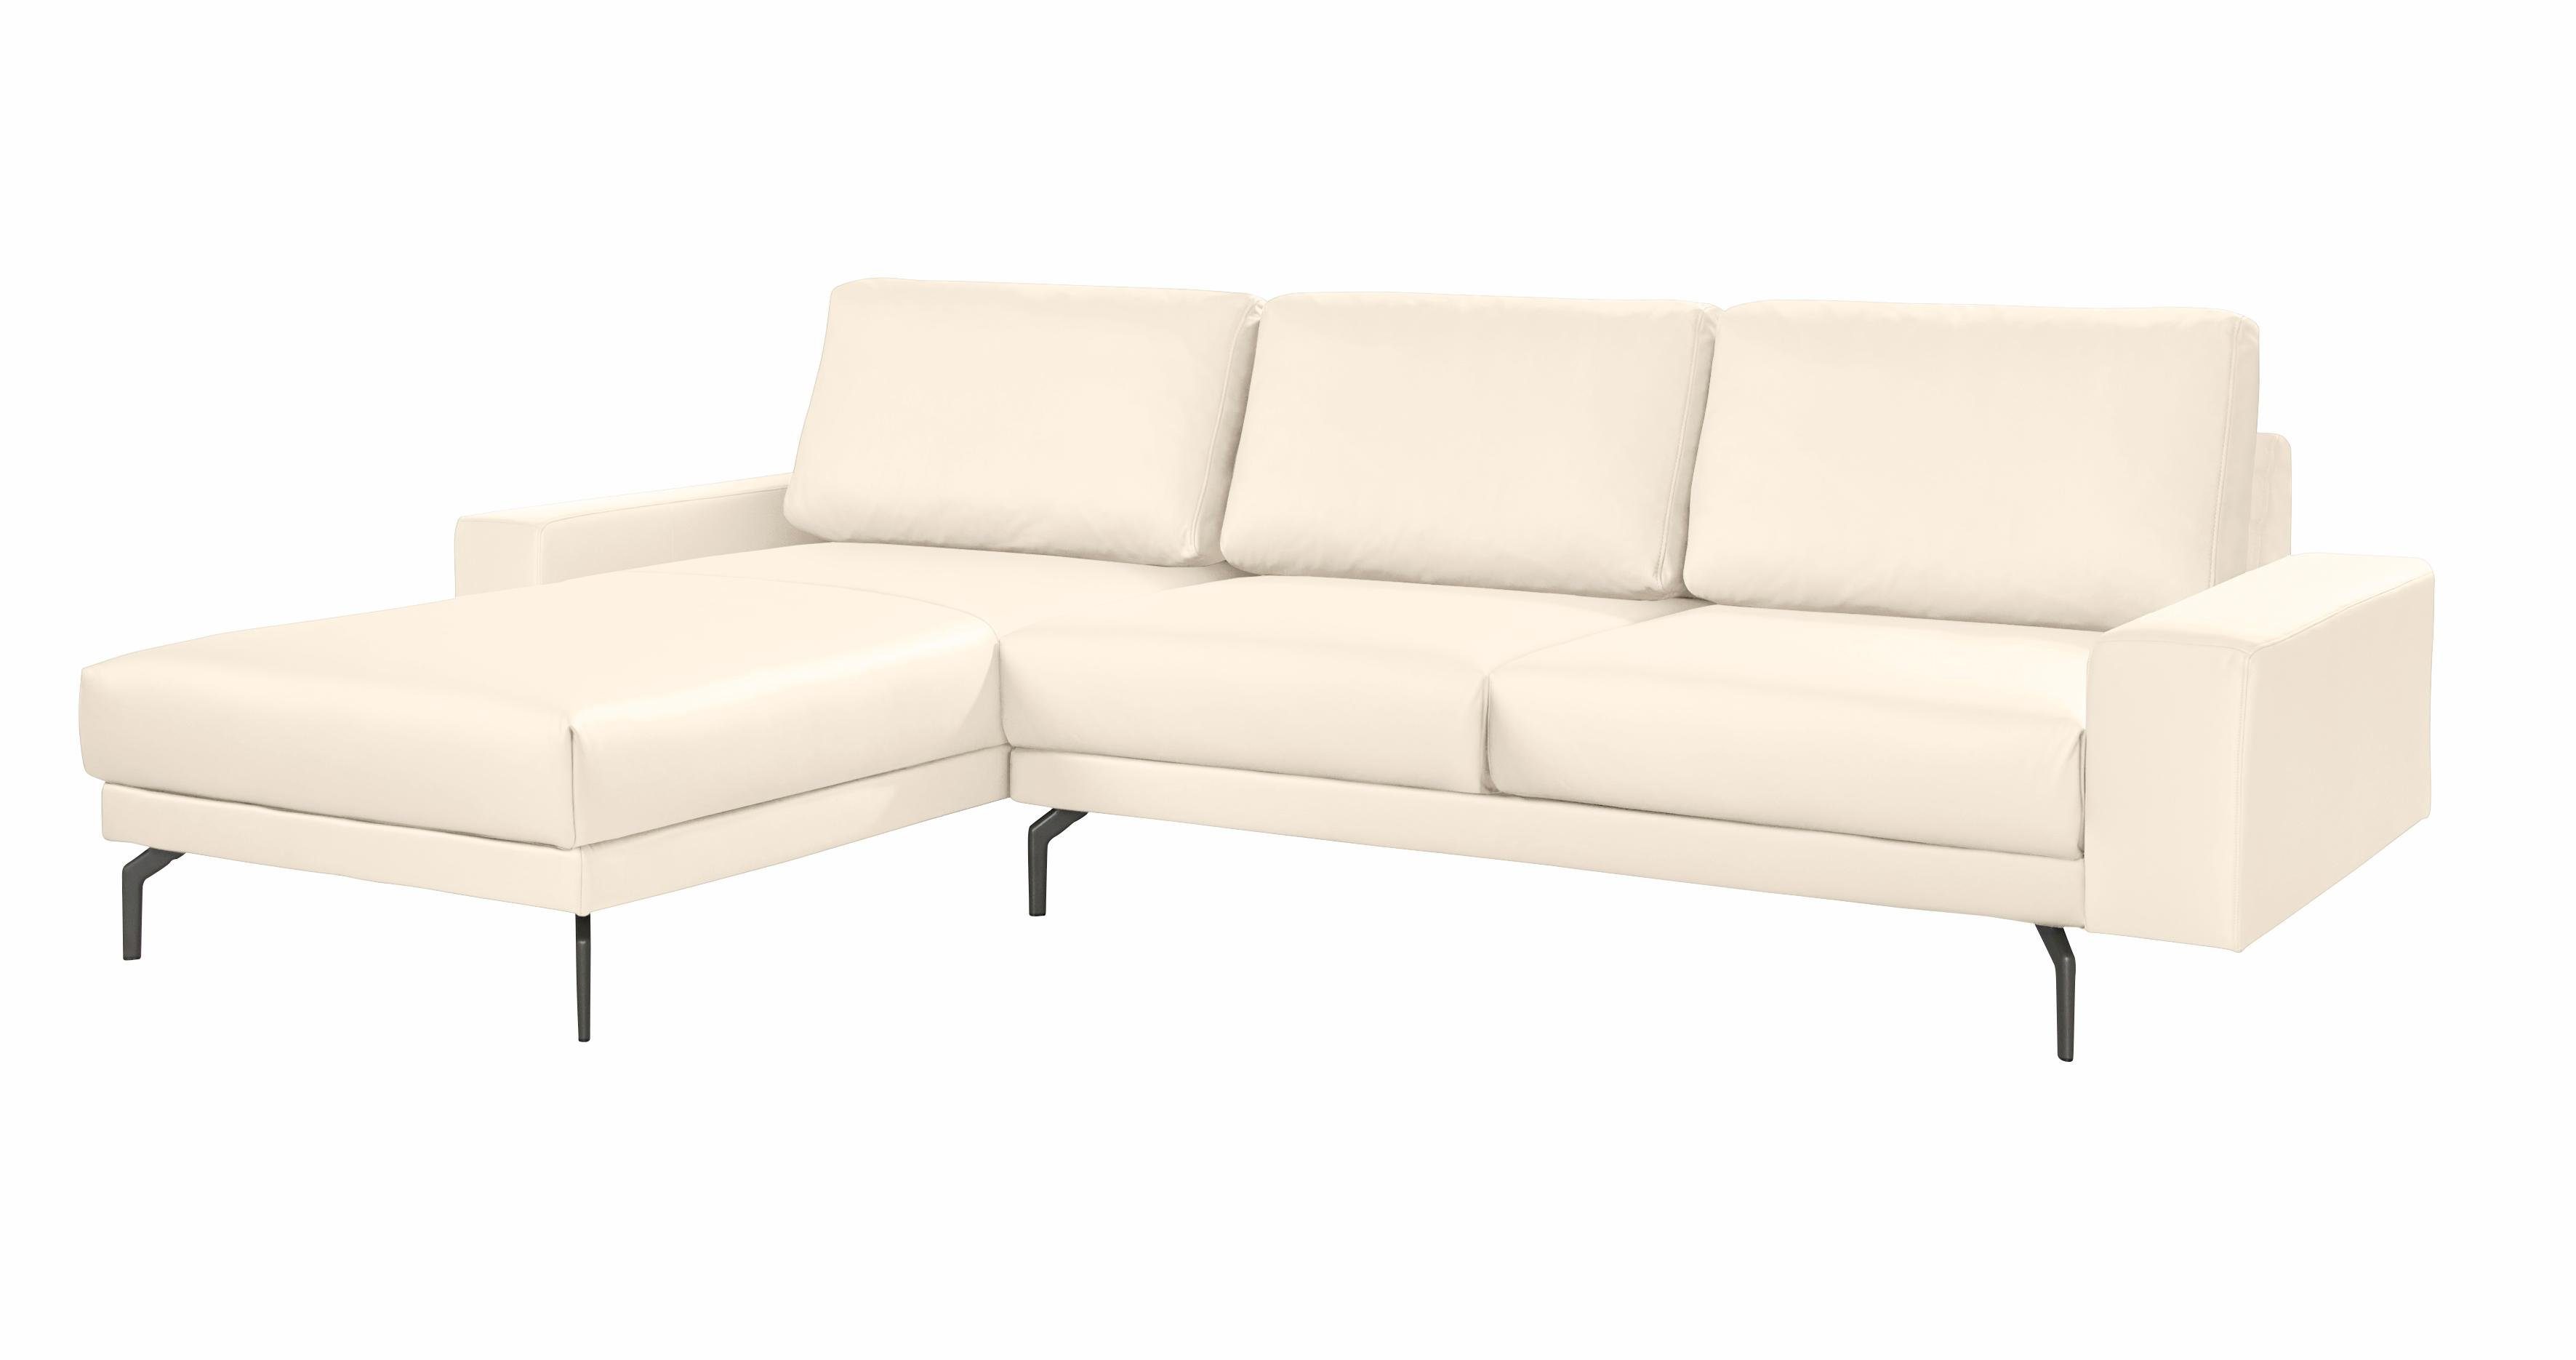 umbragrau, sofa breit hs.450, in Armlehne hülsta 294 Alugussfüße Ecksofa cm Breite niedrig, und